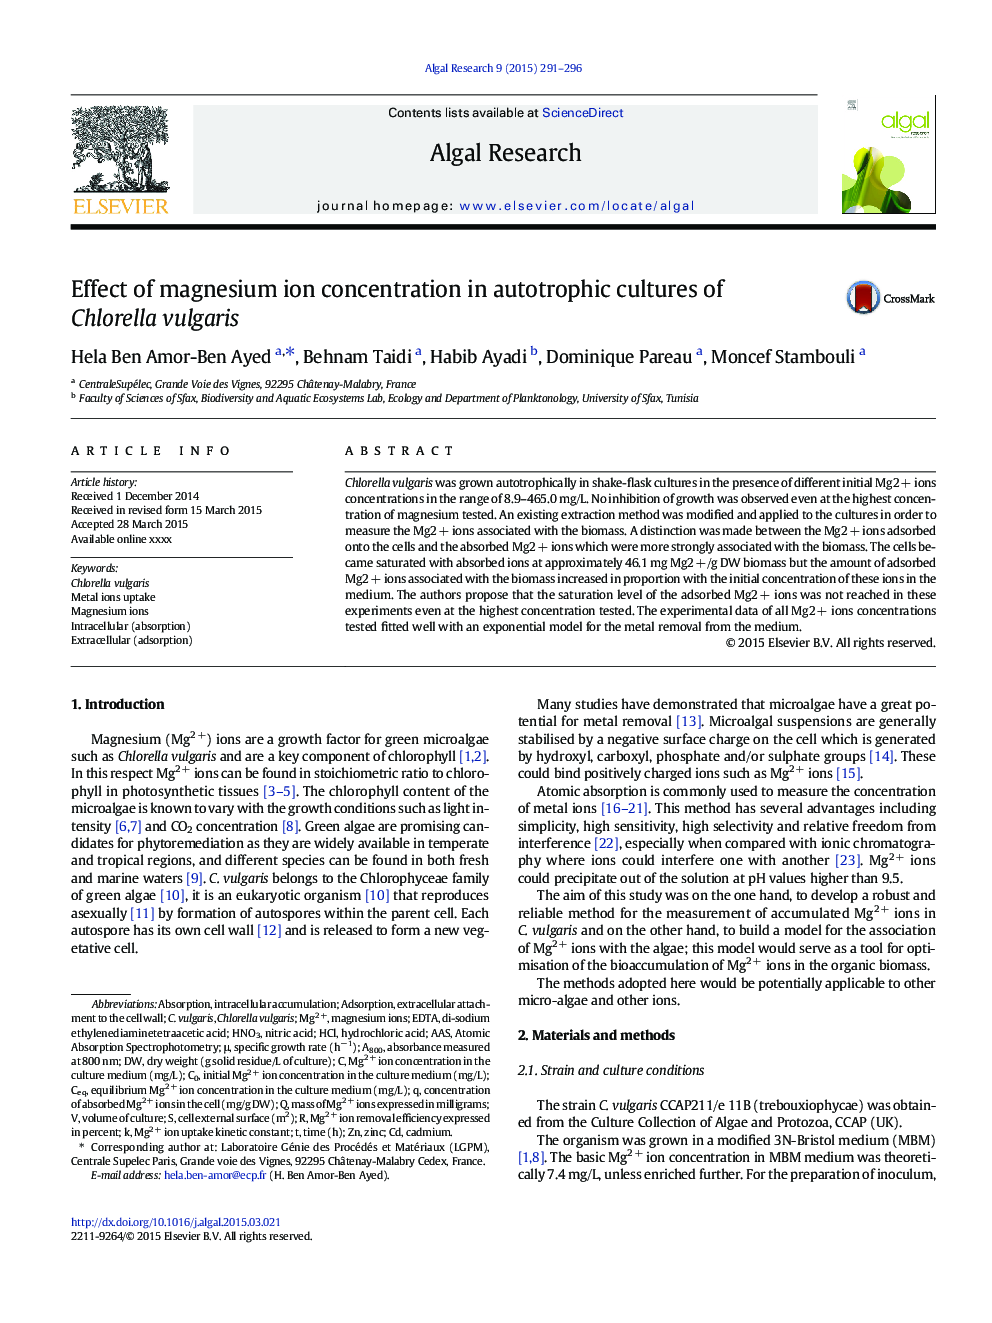 Effect of magnesium ion concentration in autotrophic cultures of Chlorella vulgaris